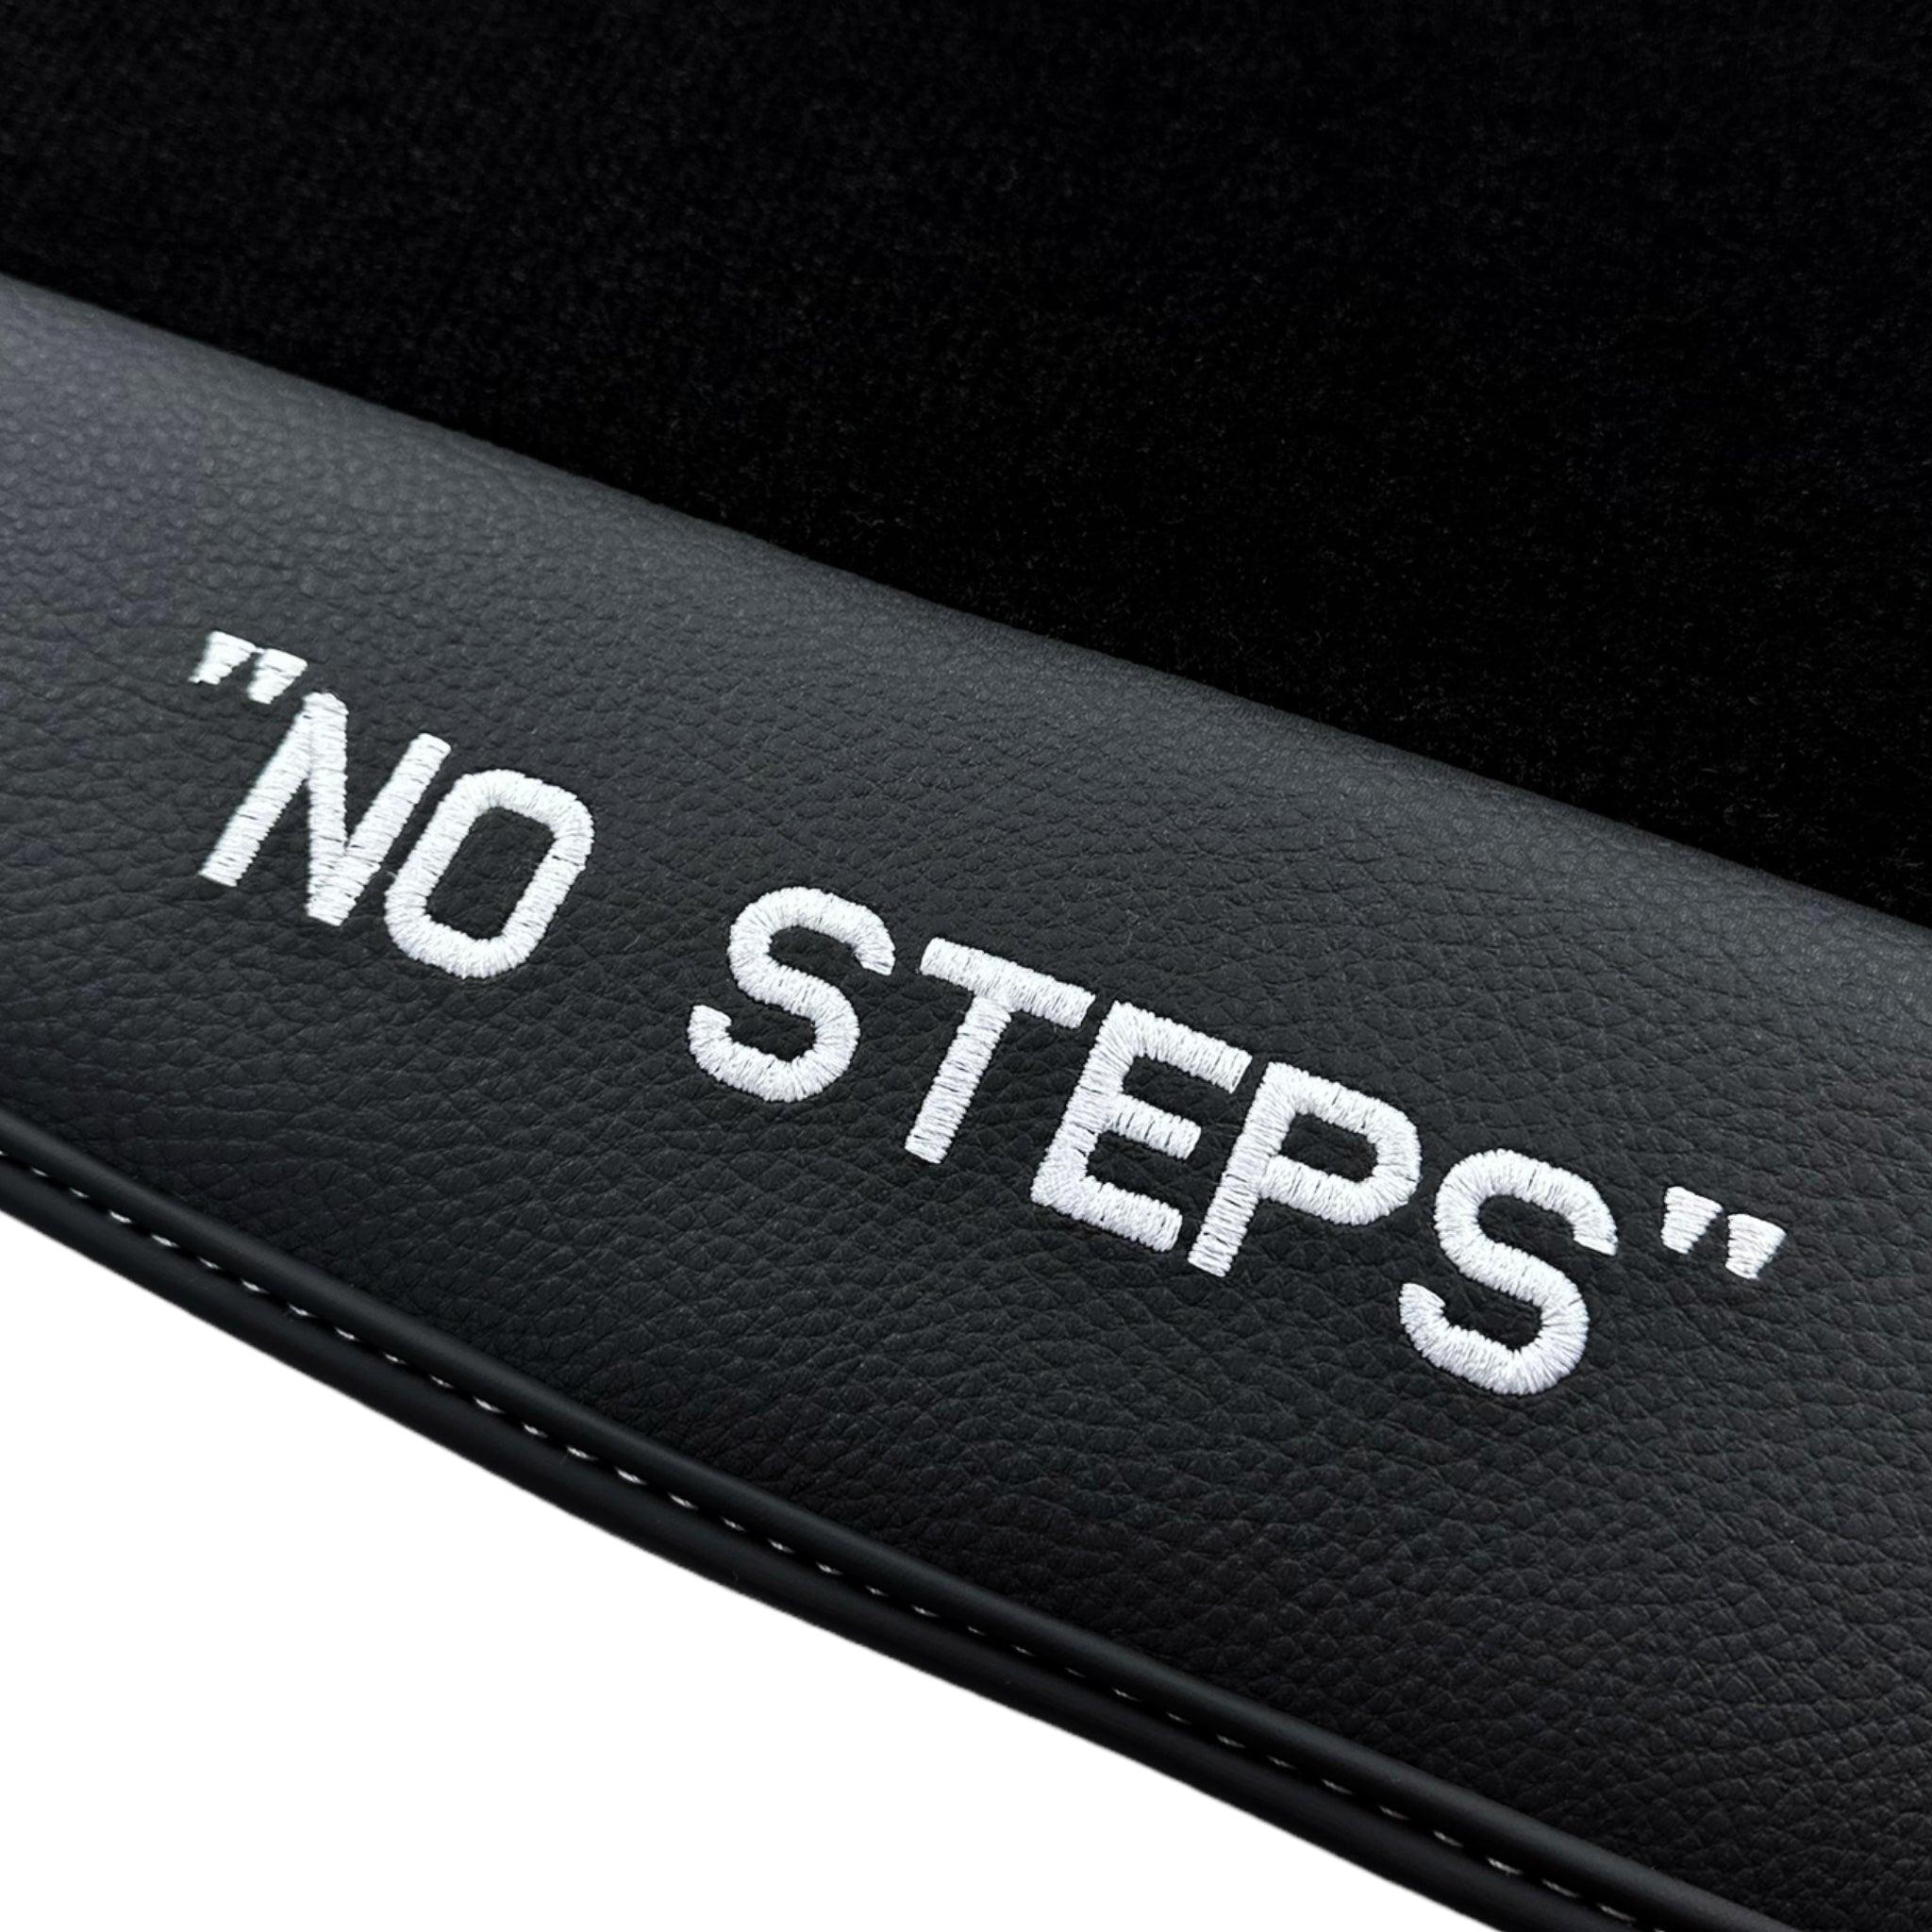 Black Floor Mats for Audi A3 - 5-door Sedan (2013-2020) | No Steps Edition